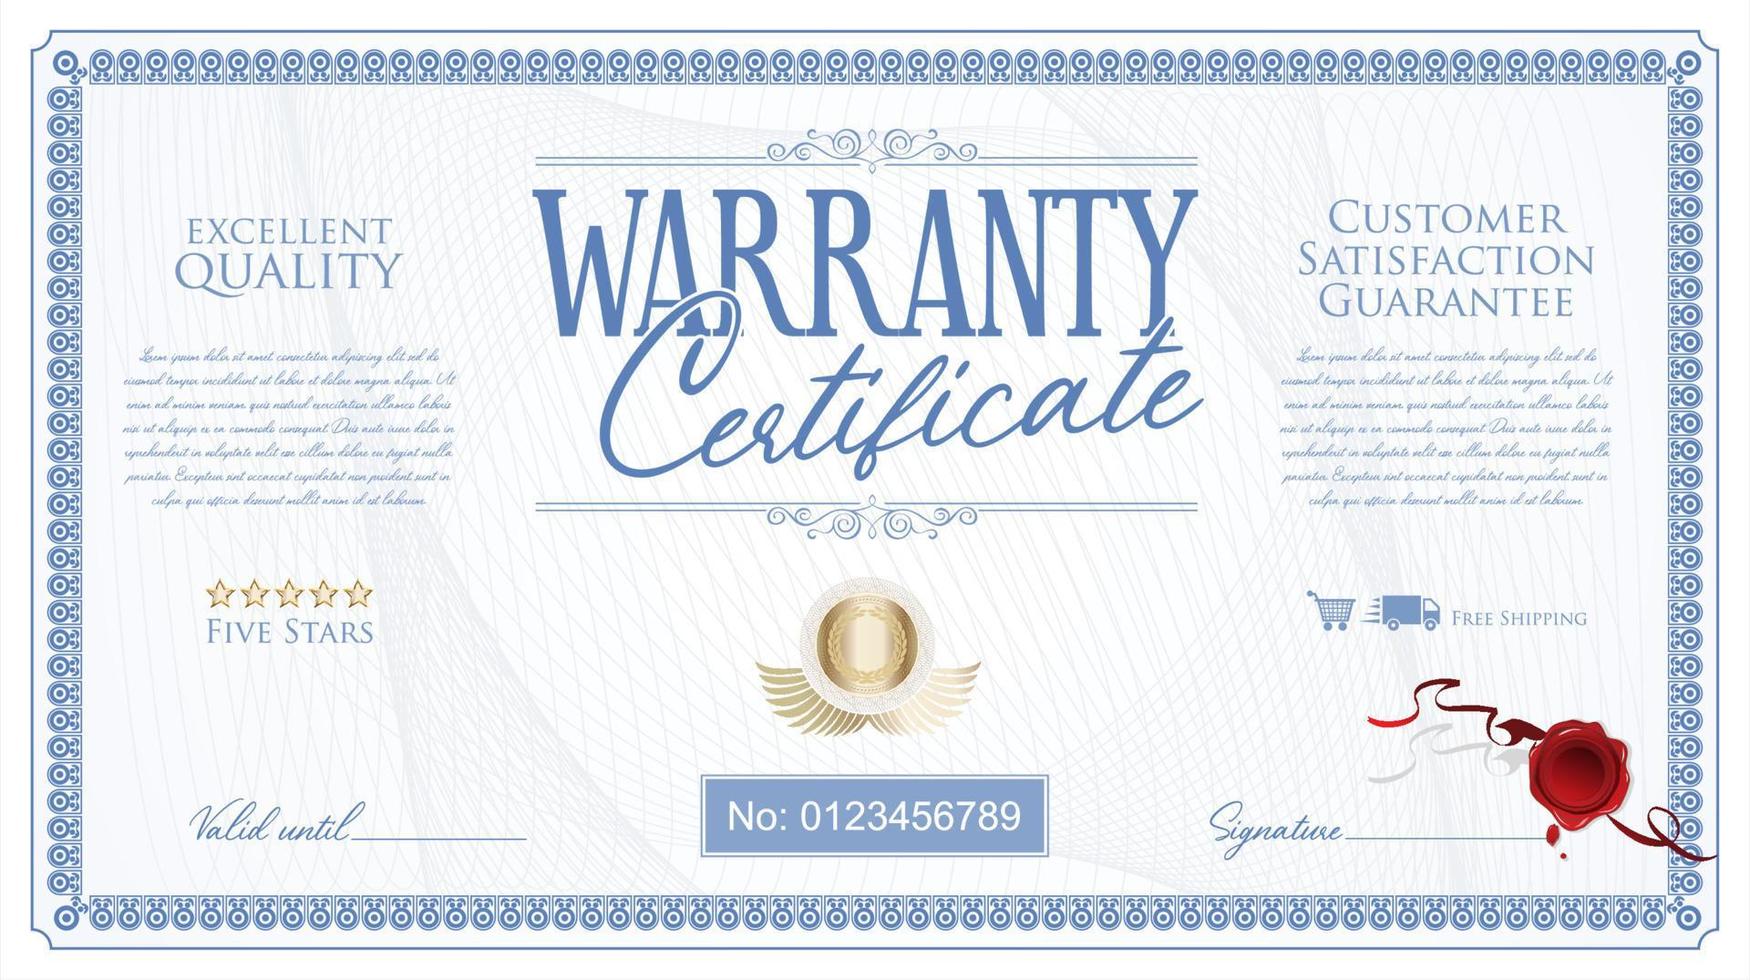 Warranty Certificate retro vintage design vector illustration